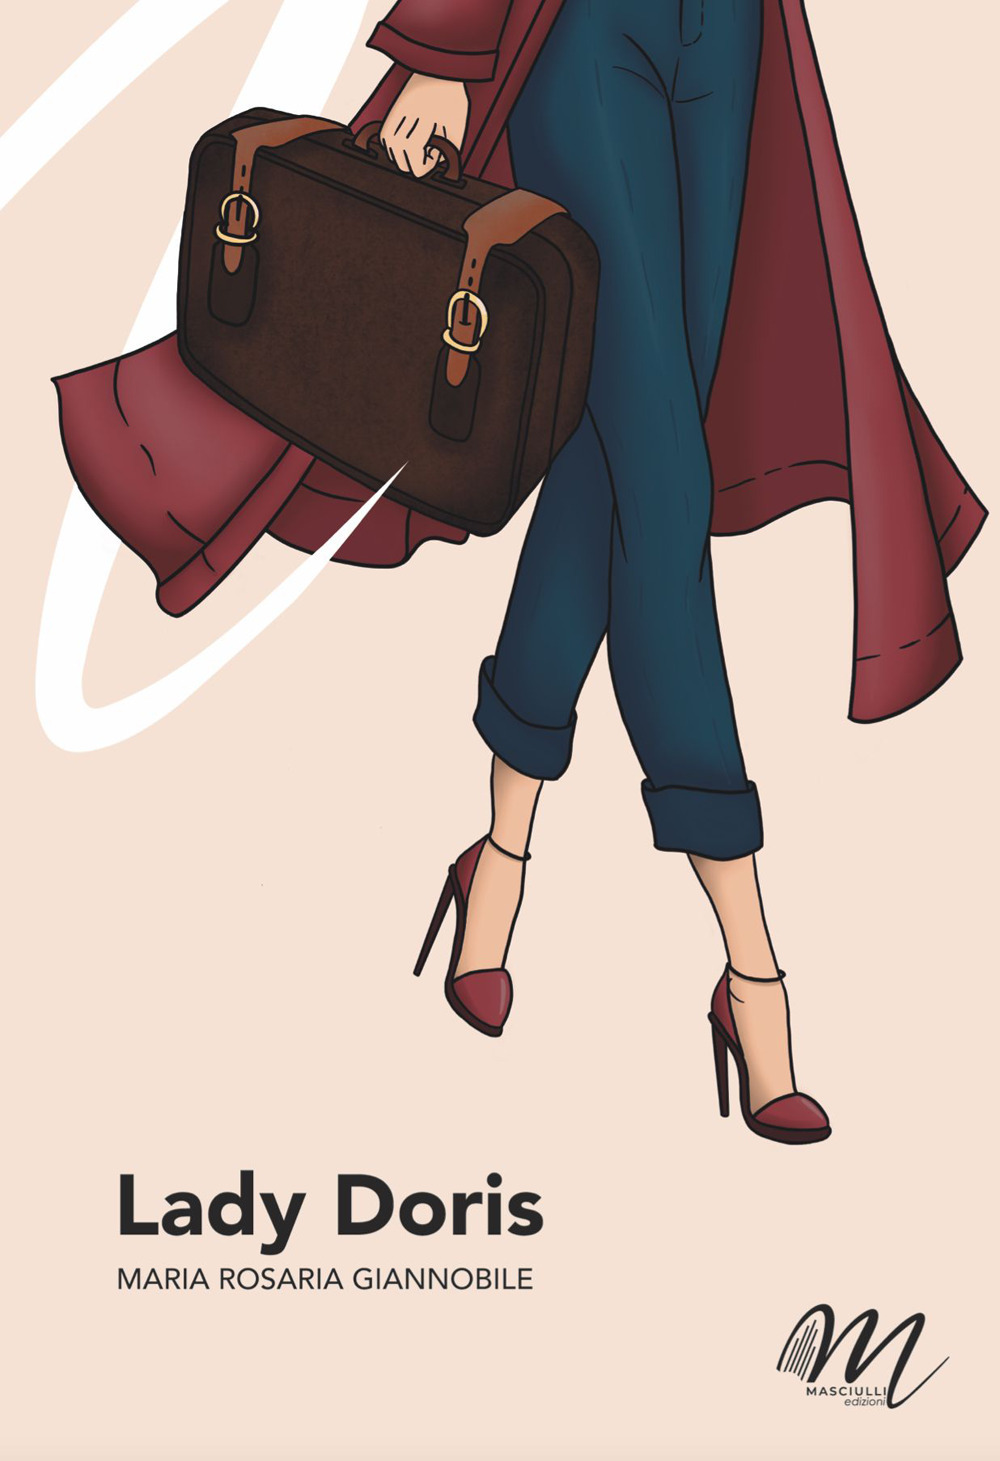 Lady Doris